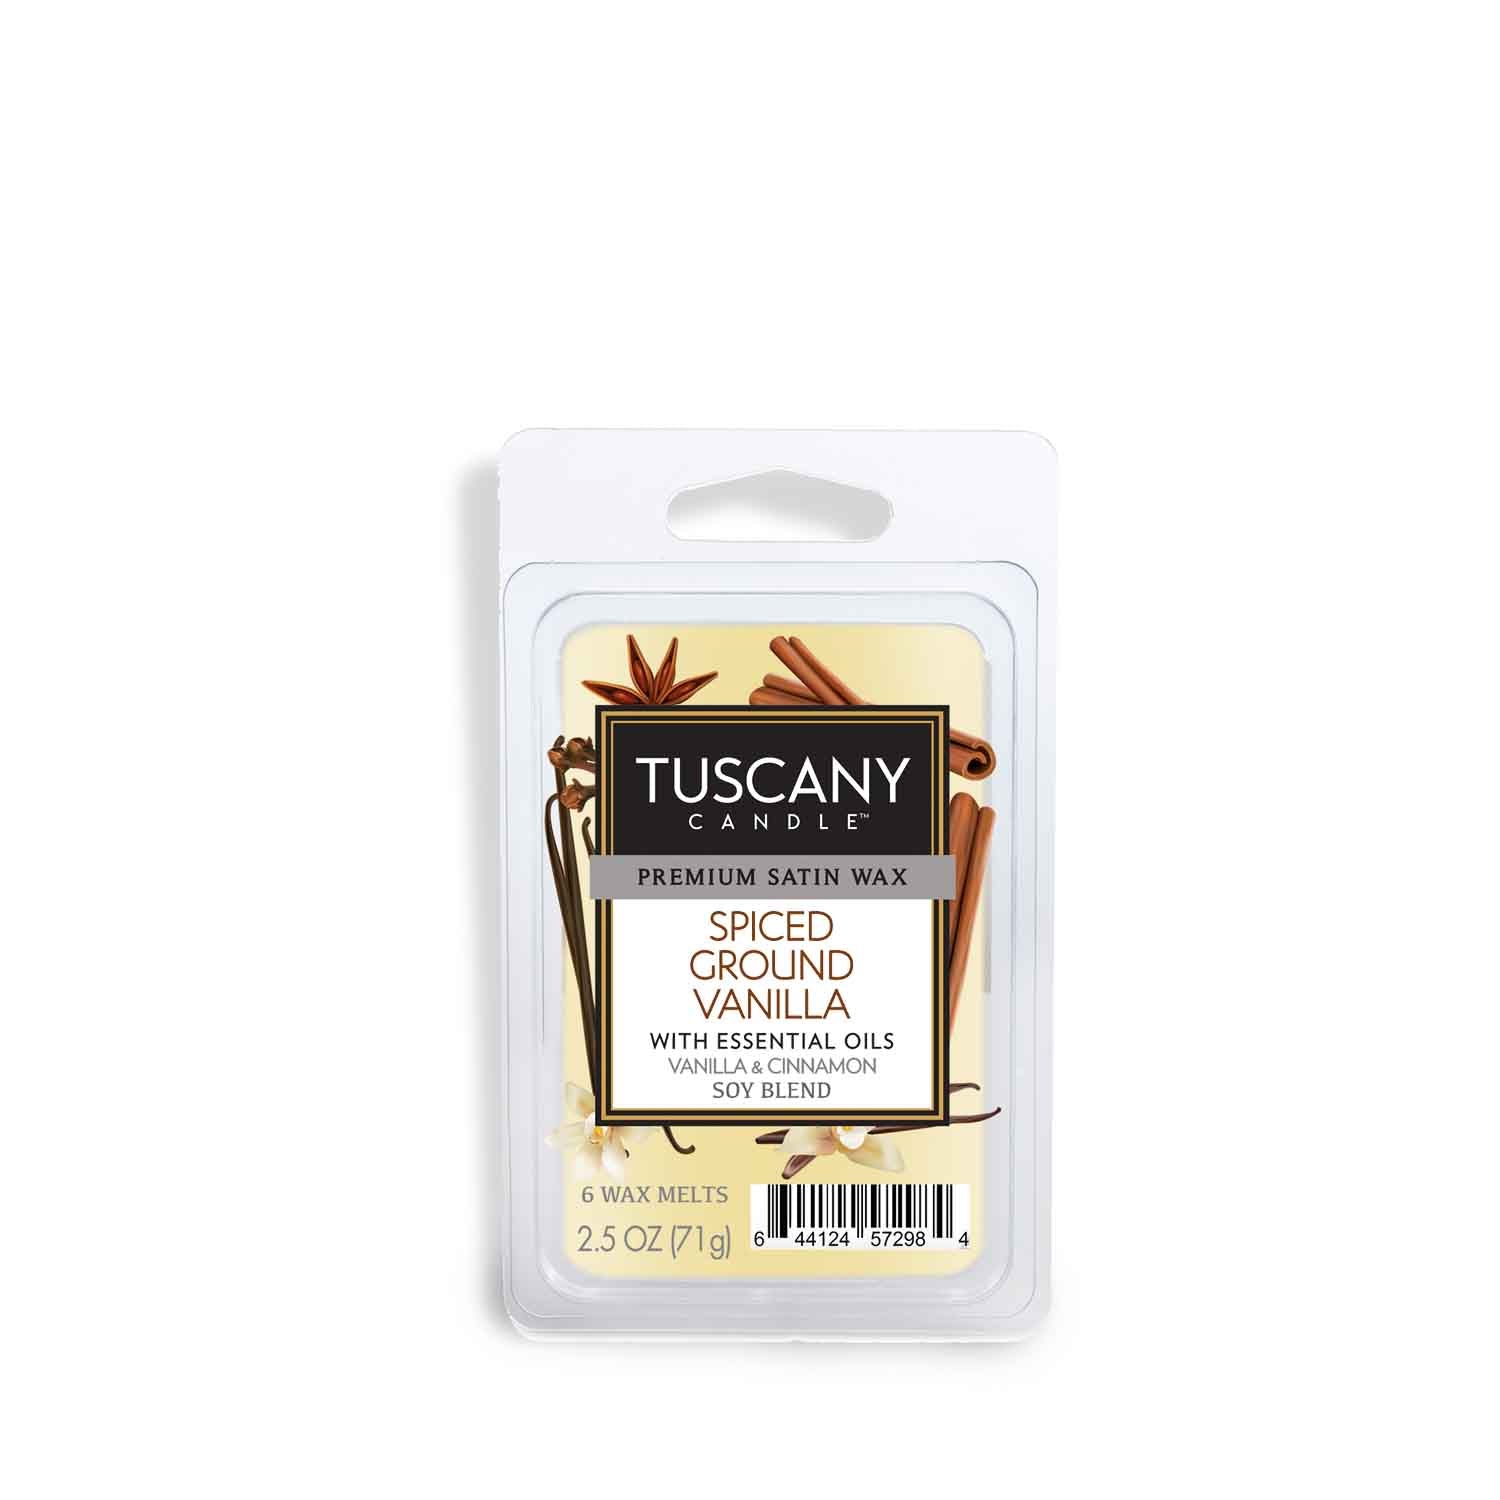 Tuscany Candle Wax Melts, Cinnamon - 2.5 oz